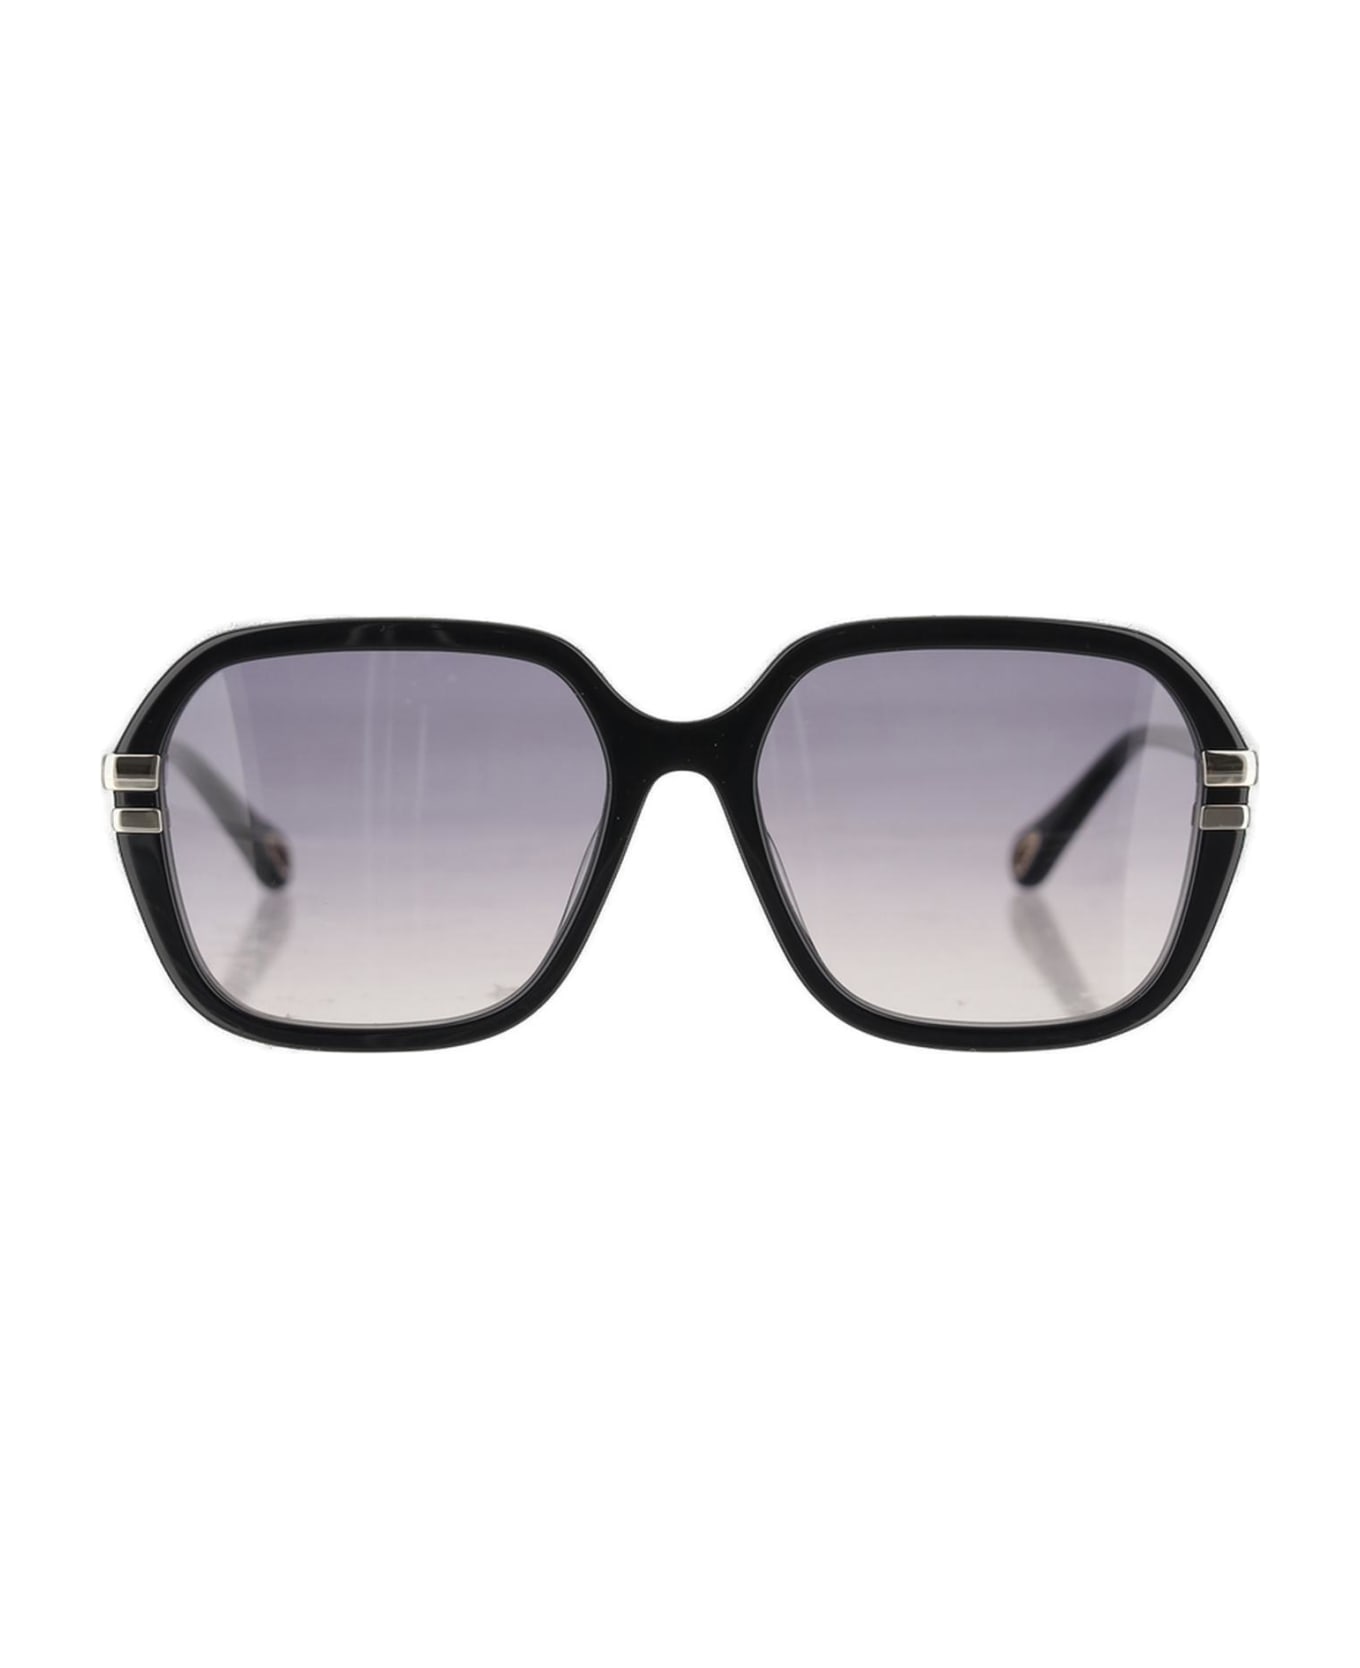 Chloé Rectangle Frame Sunglasses - black/grey